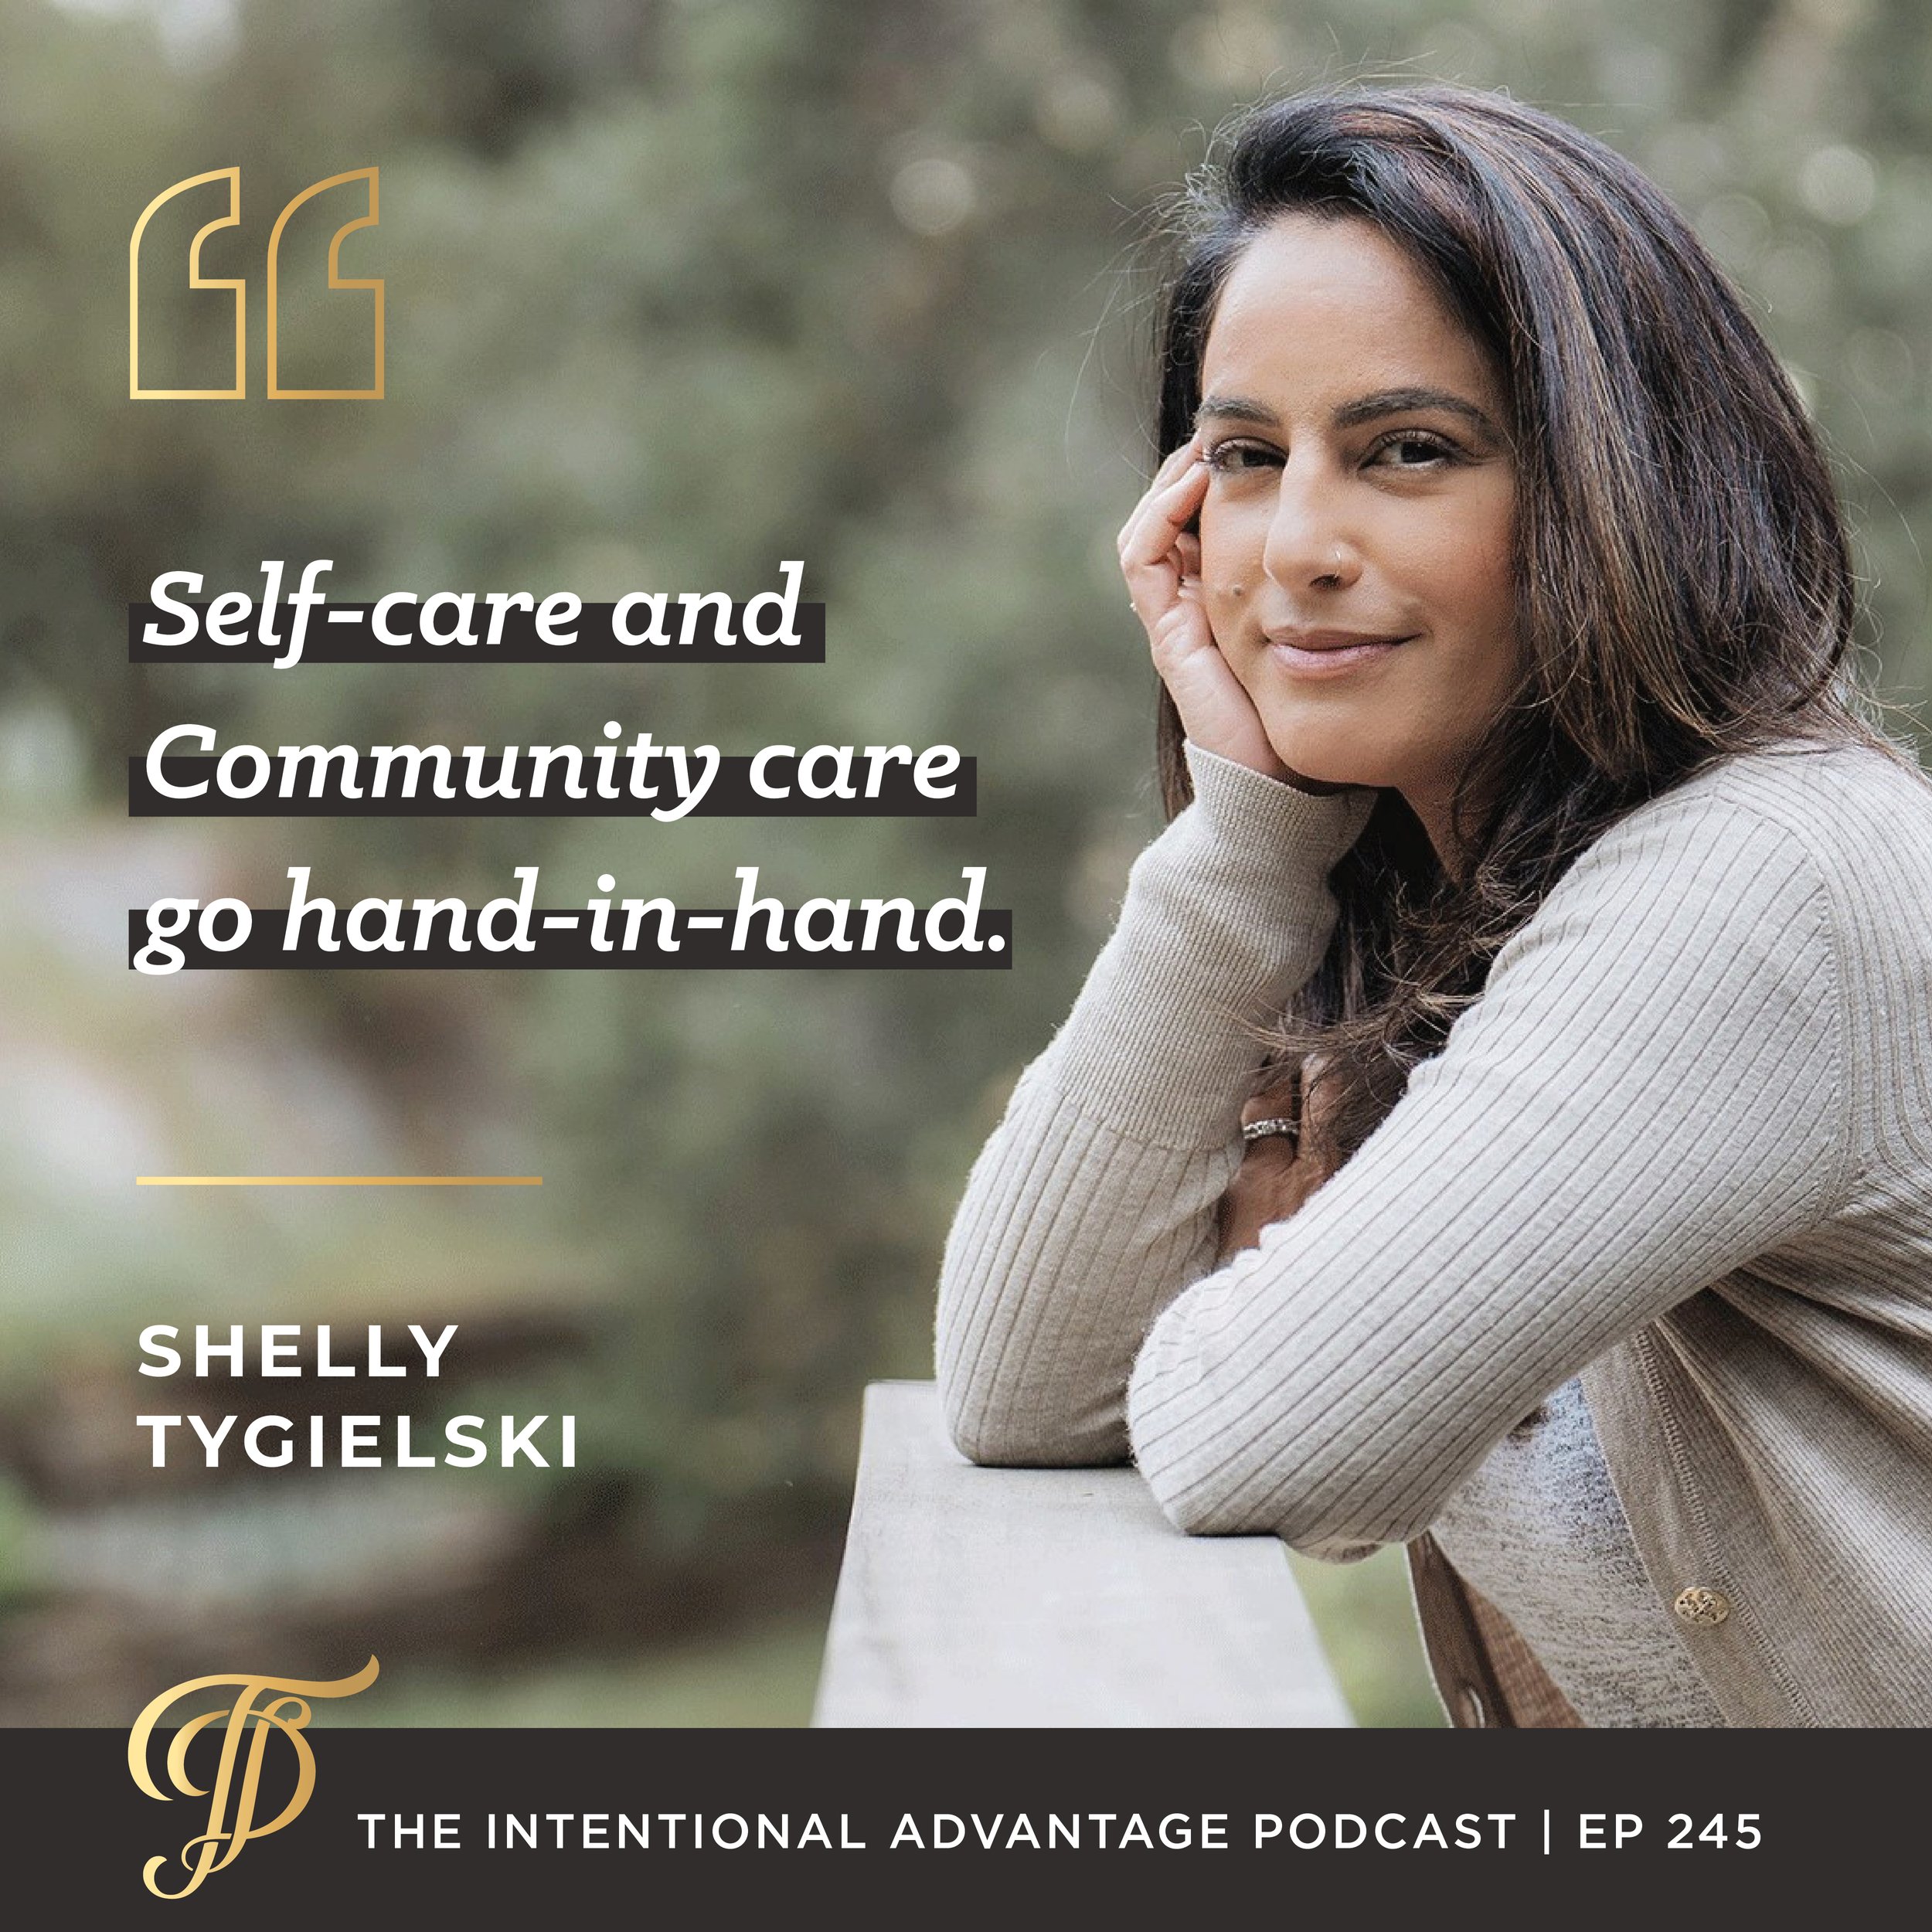 Shelly Tygielski podcast interview on The Intentional Advantage